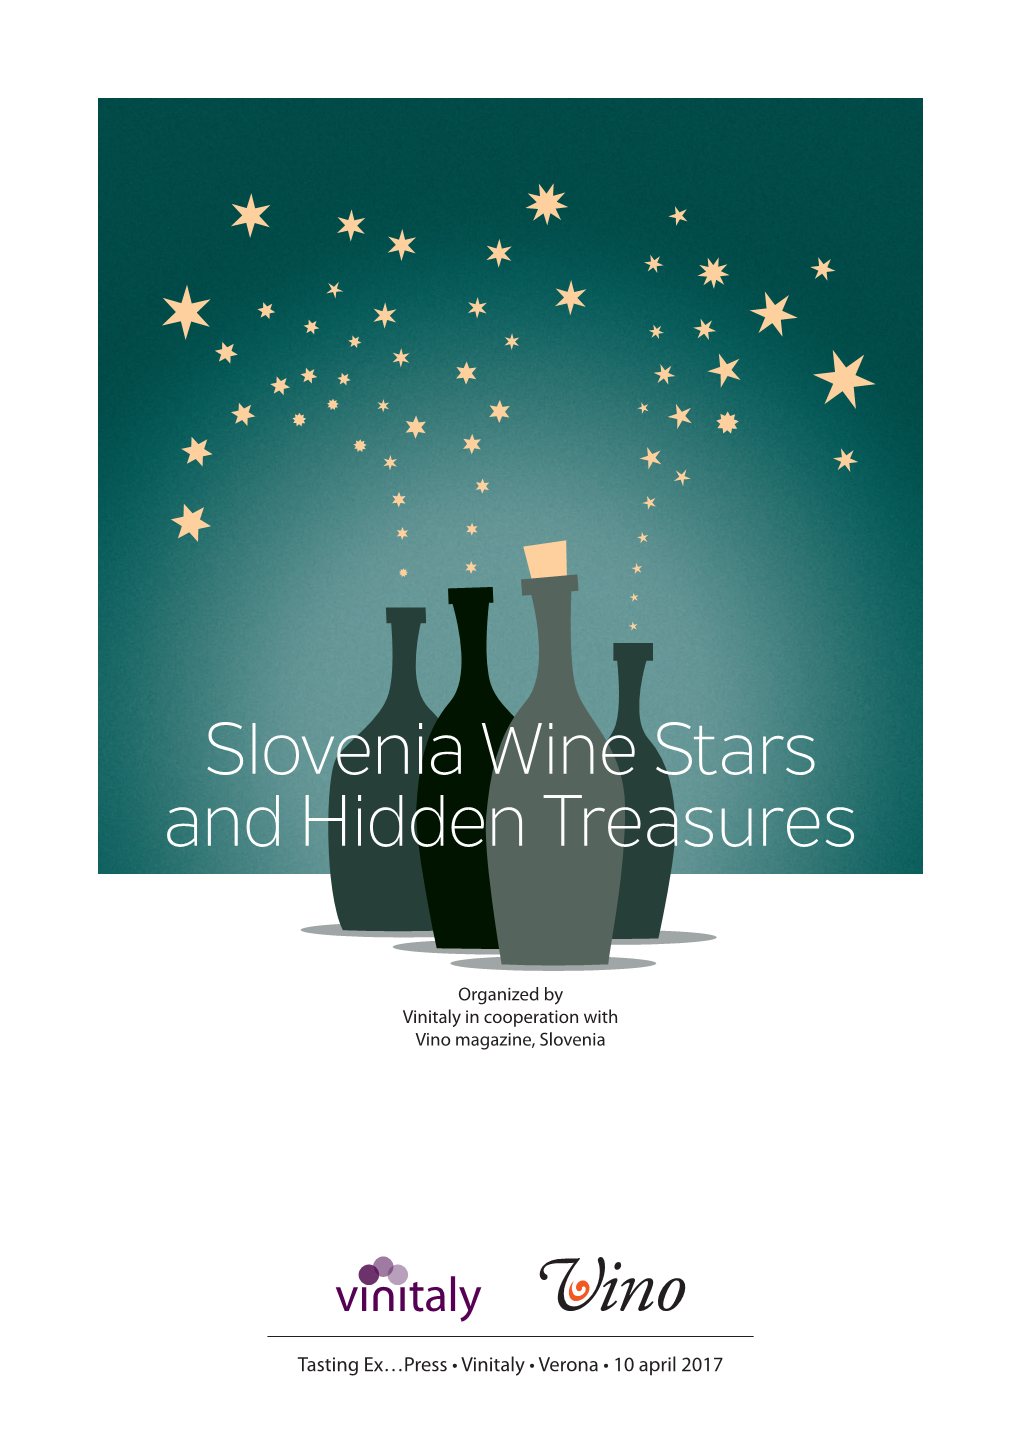 Slovenia Wine Stars and Hidden Treasures